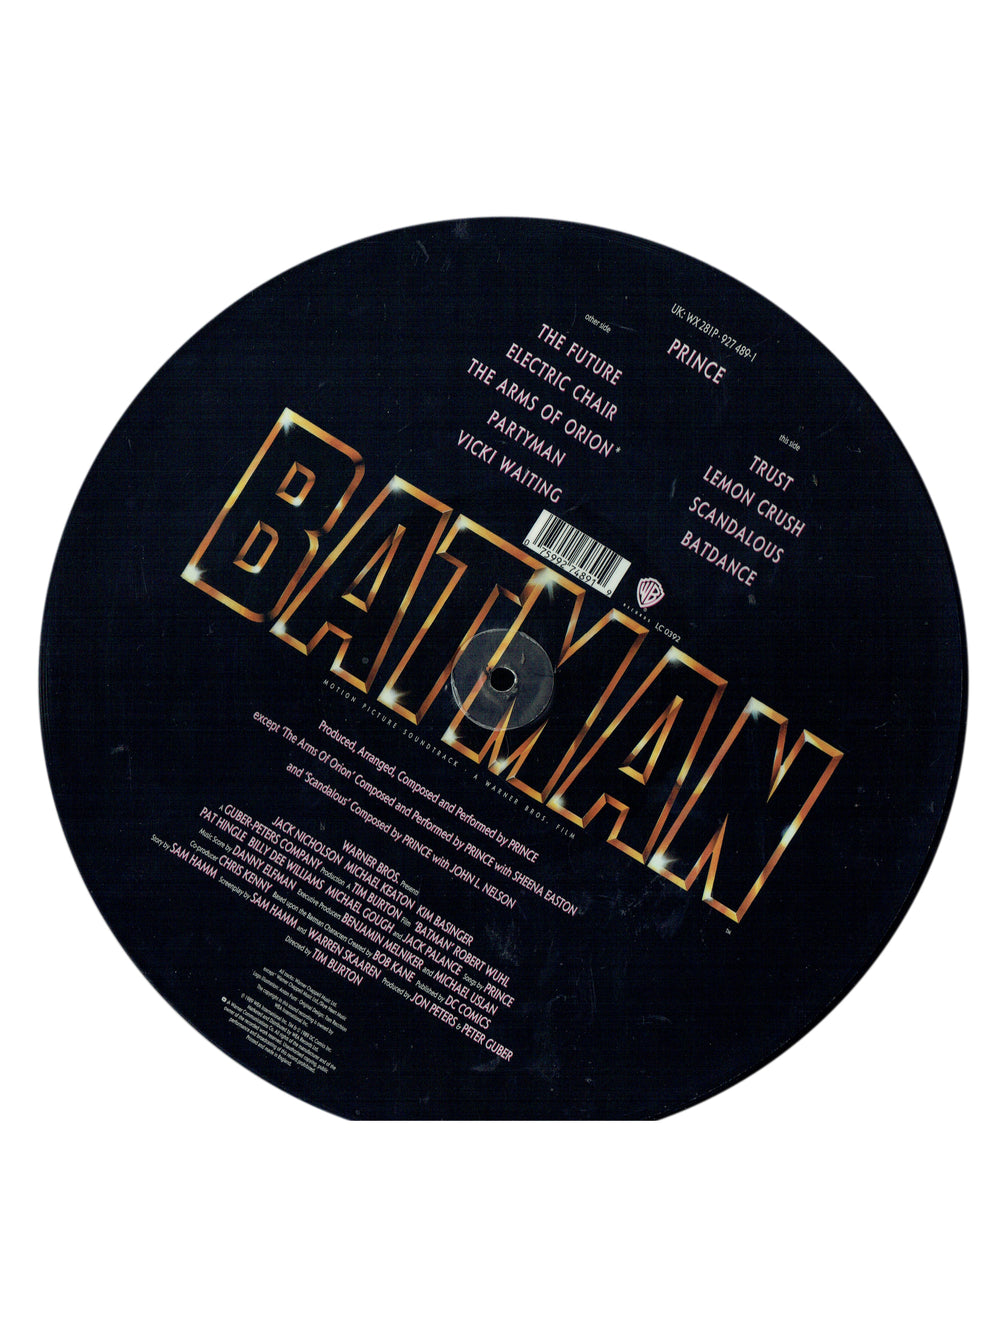 Prince – Batman Picture Disc Soundtrack UK VINYL Album Original 1989